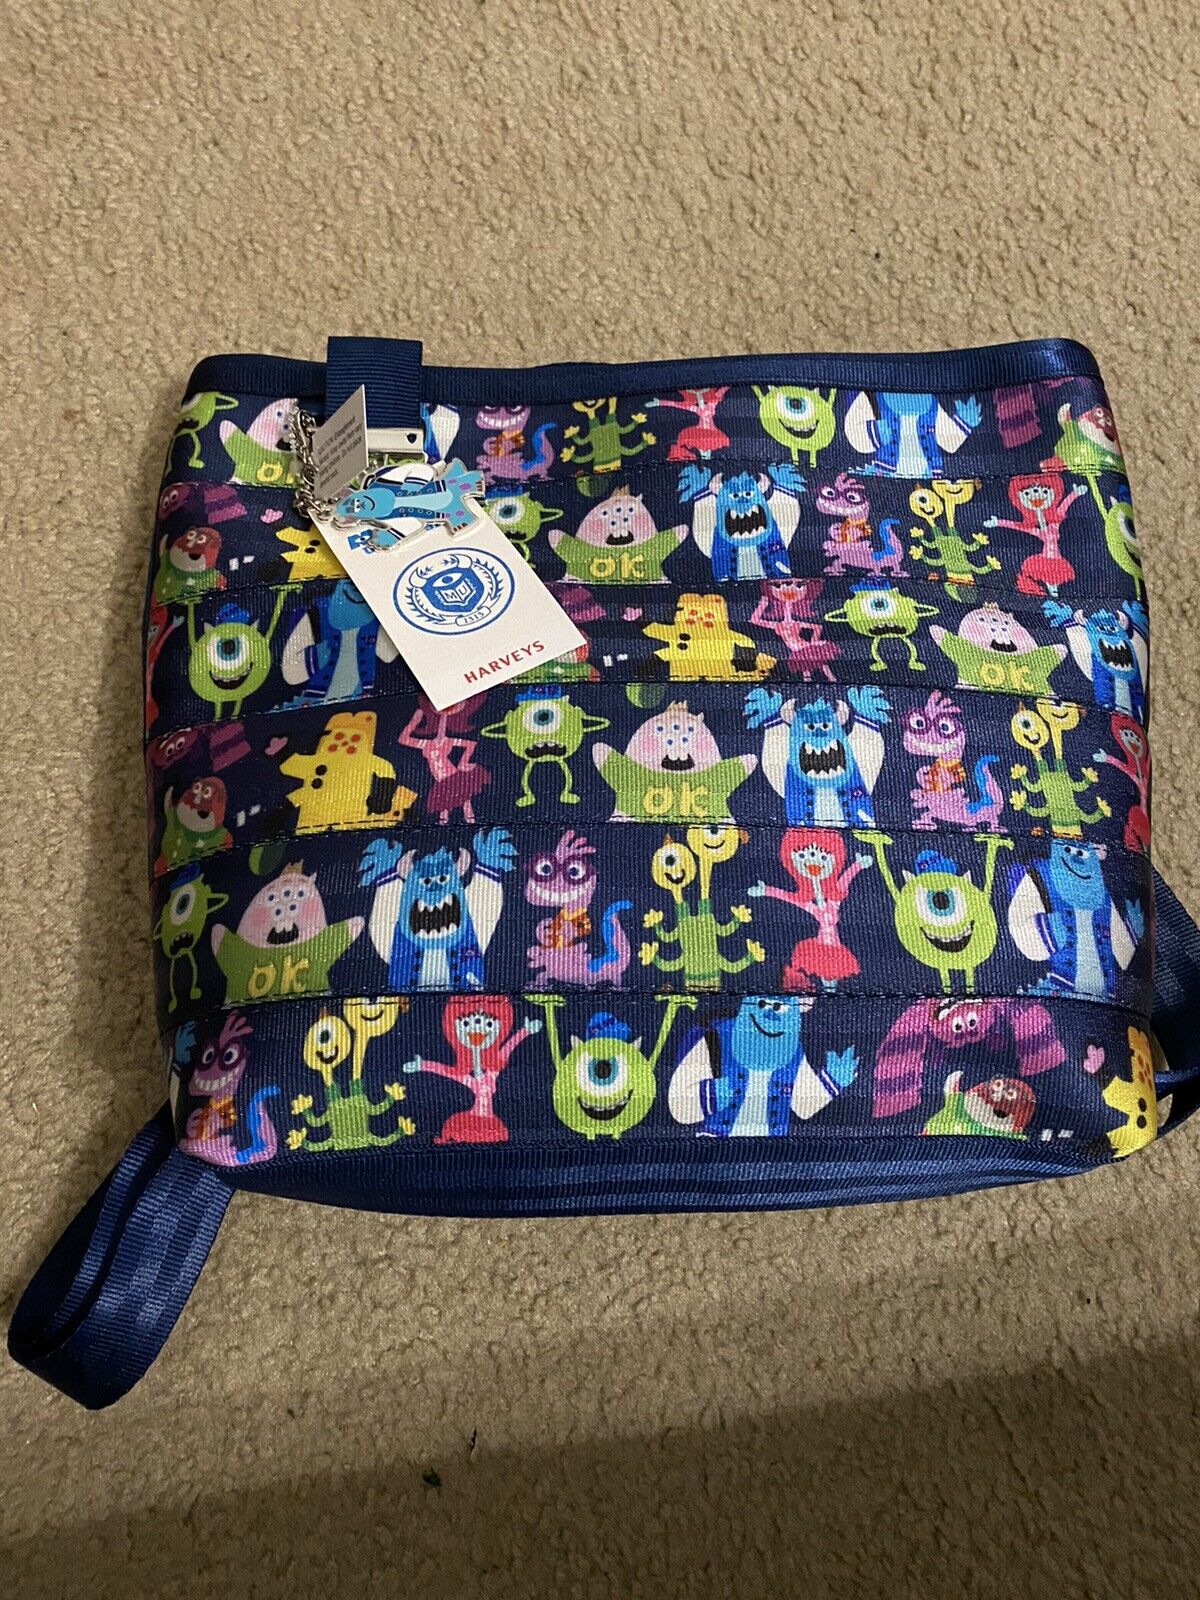 Disney Monsters University Backpack Bag by Harveys Limited IN HAND